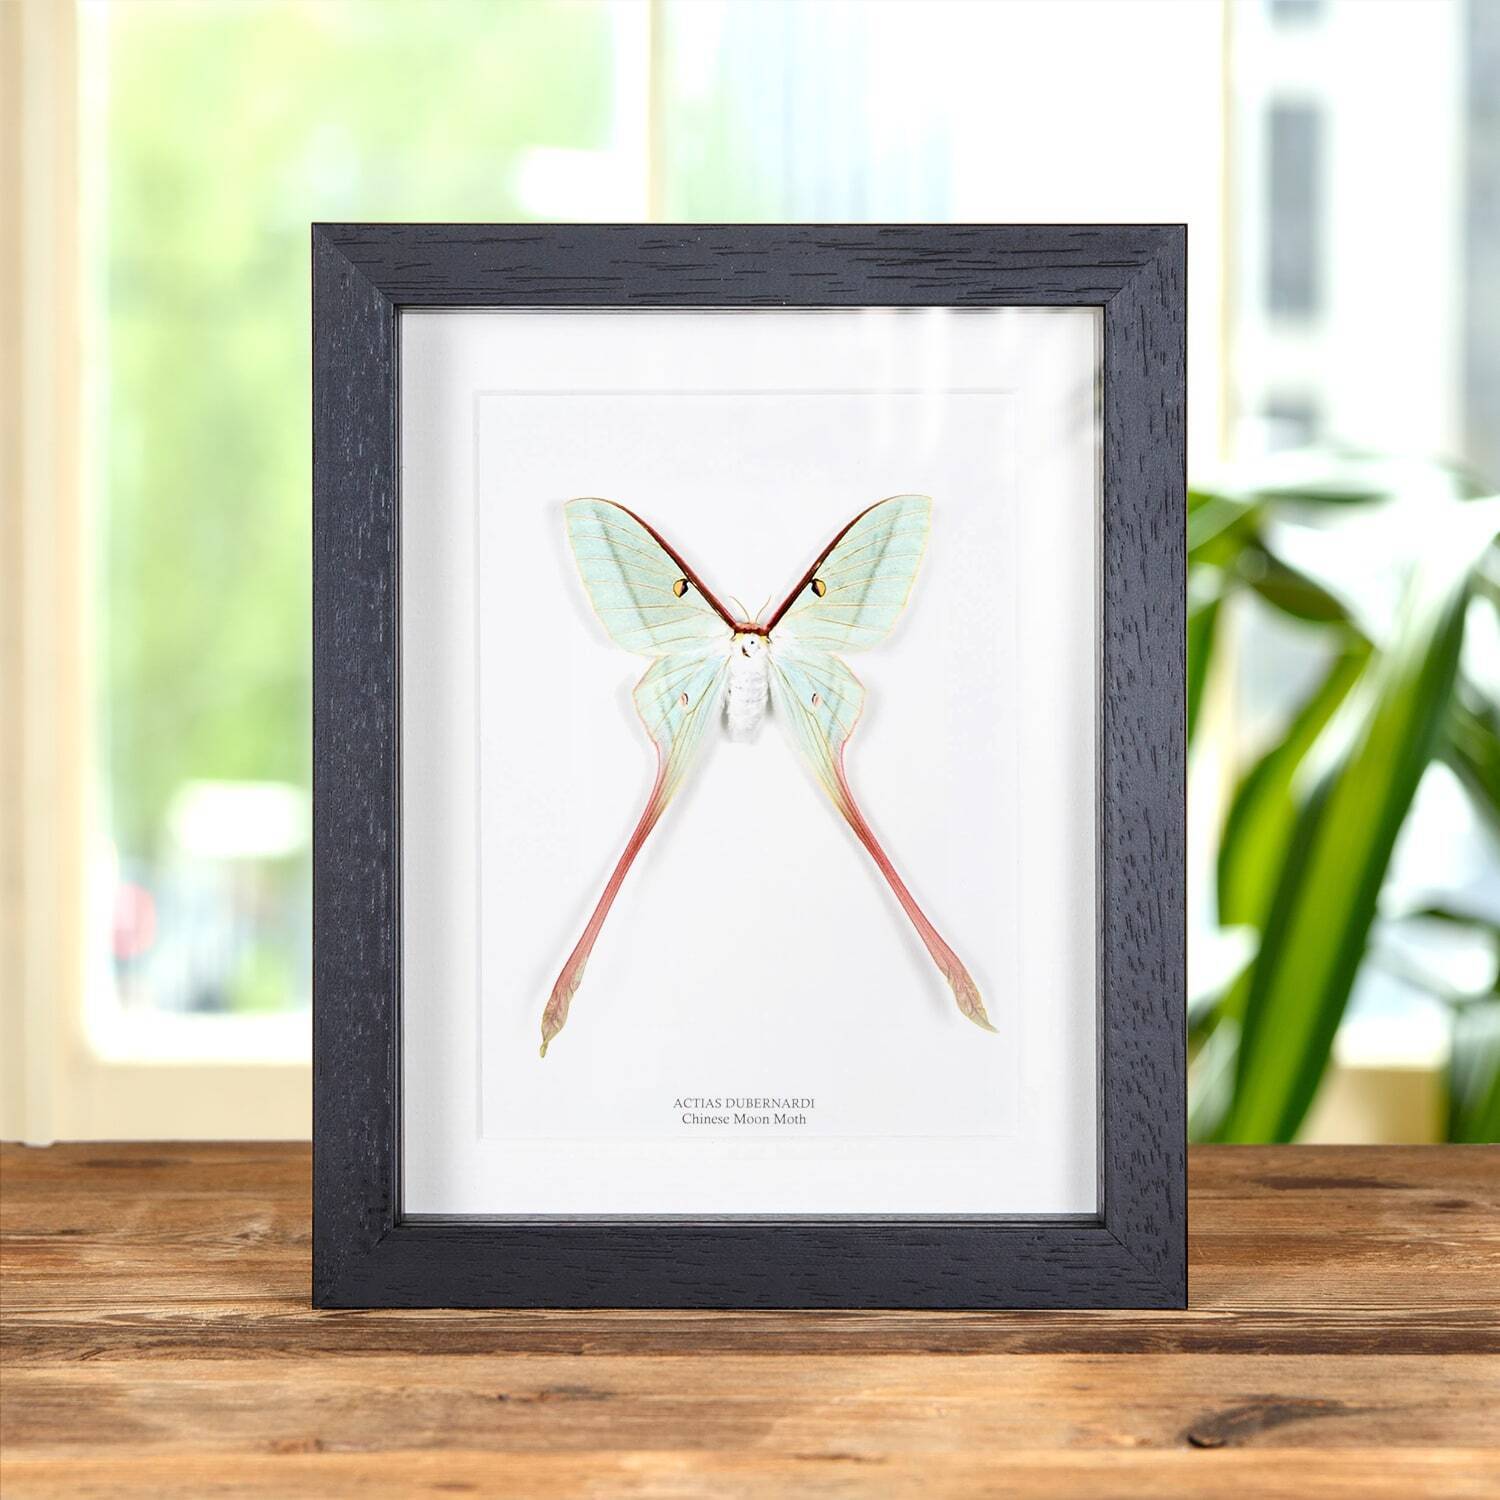 Female Chinese Moon Taxidermy Moth Frame (Actias dubernardi)